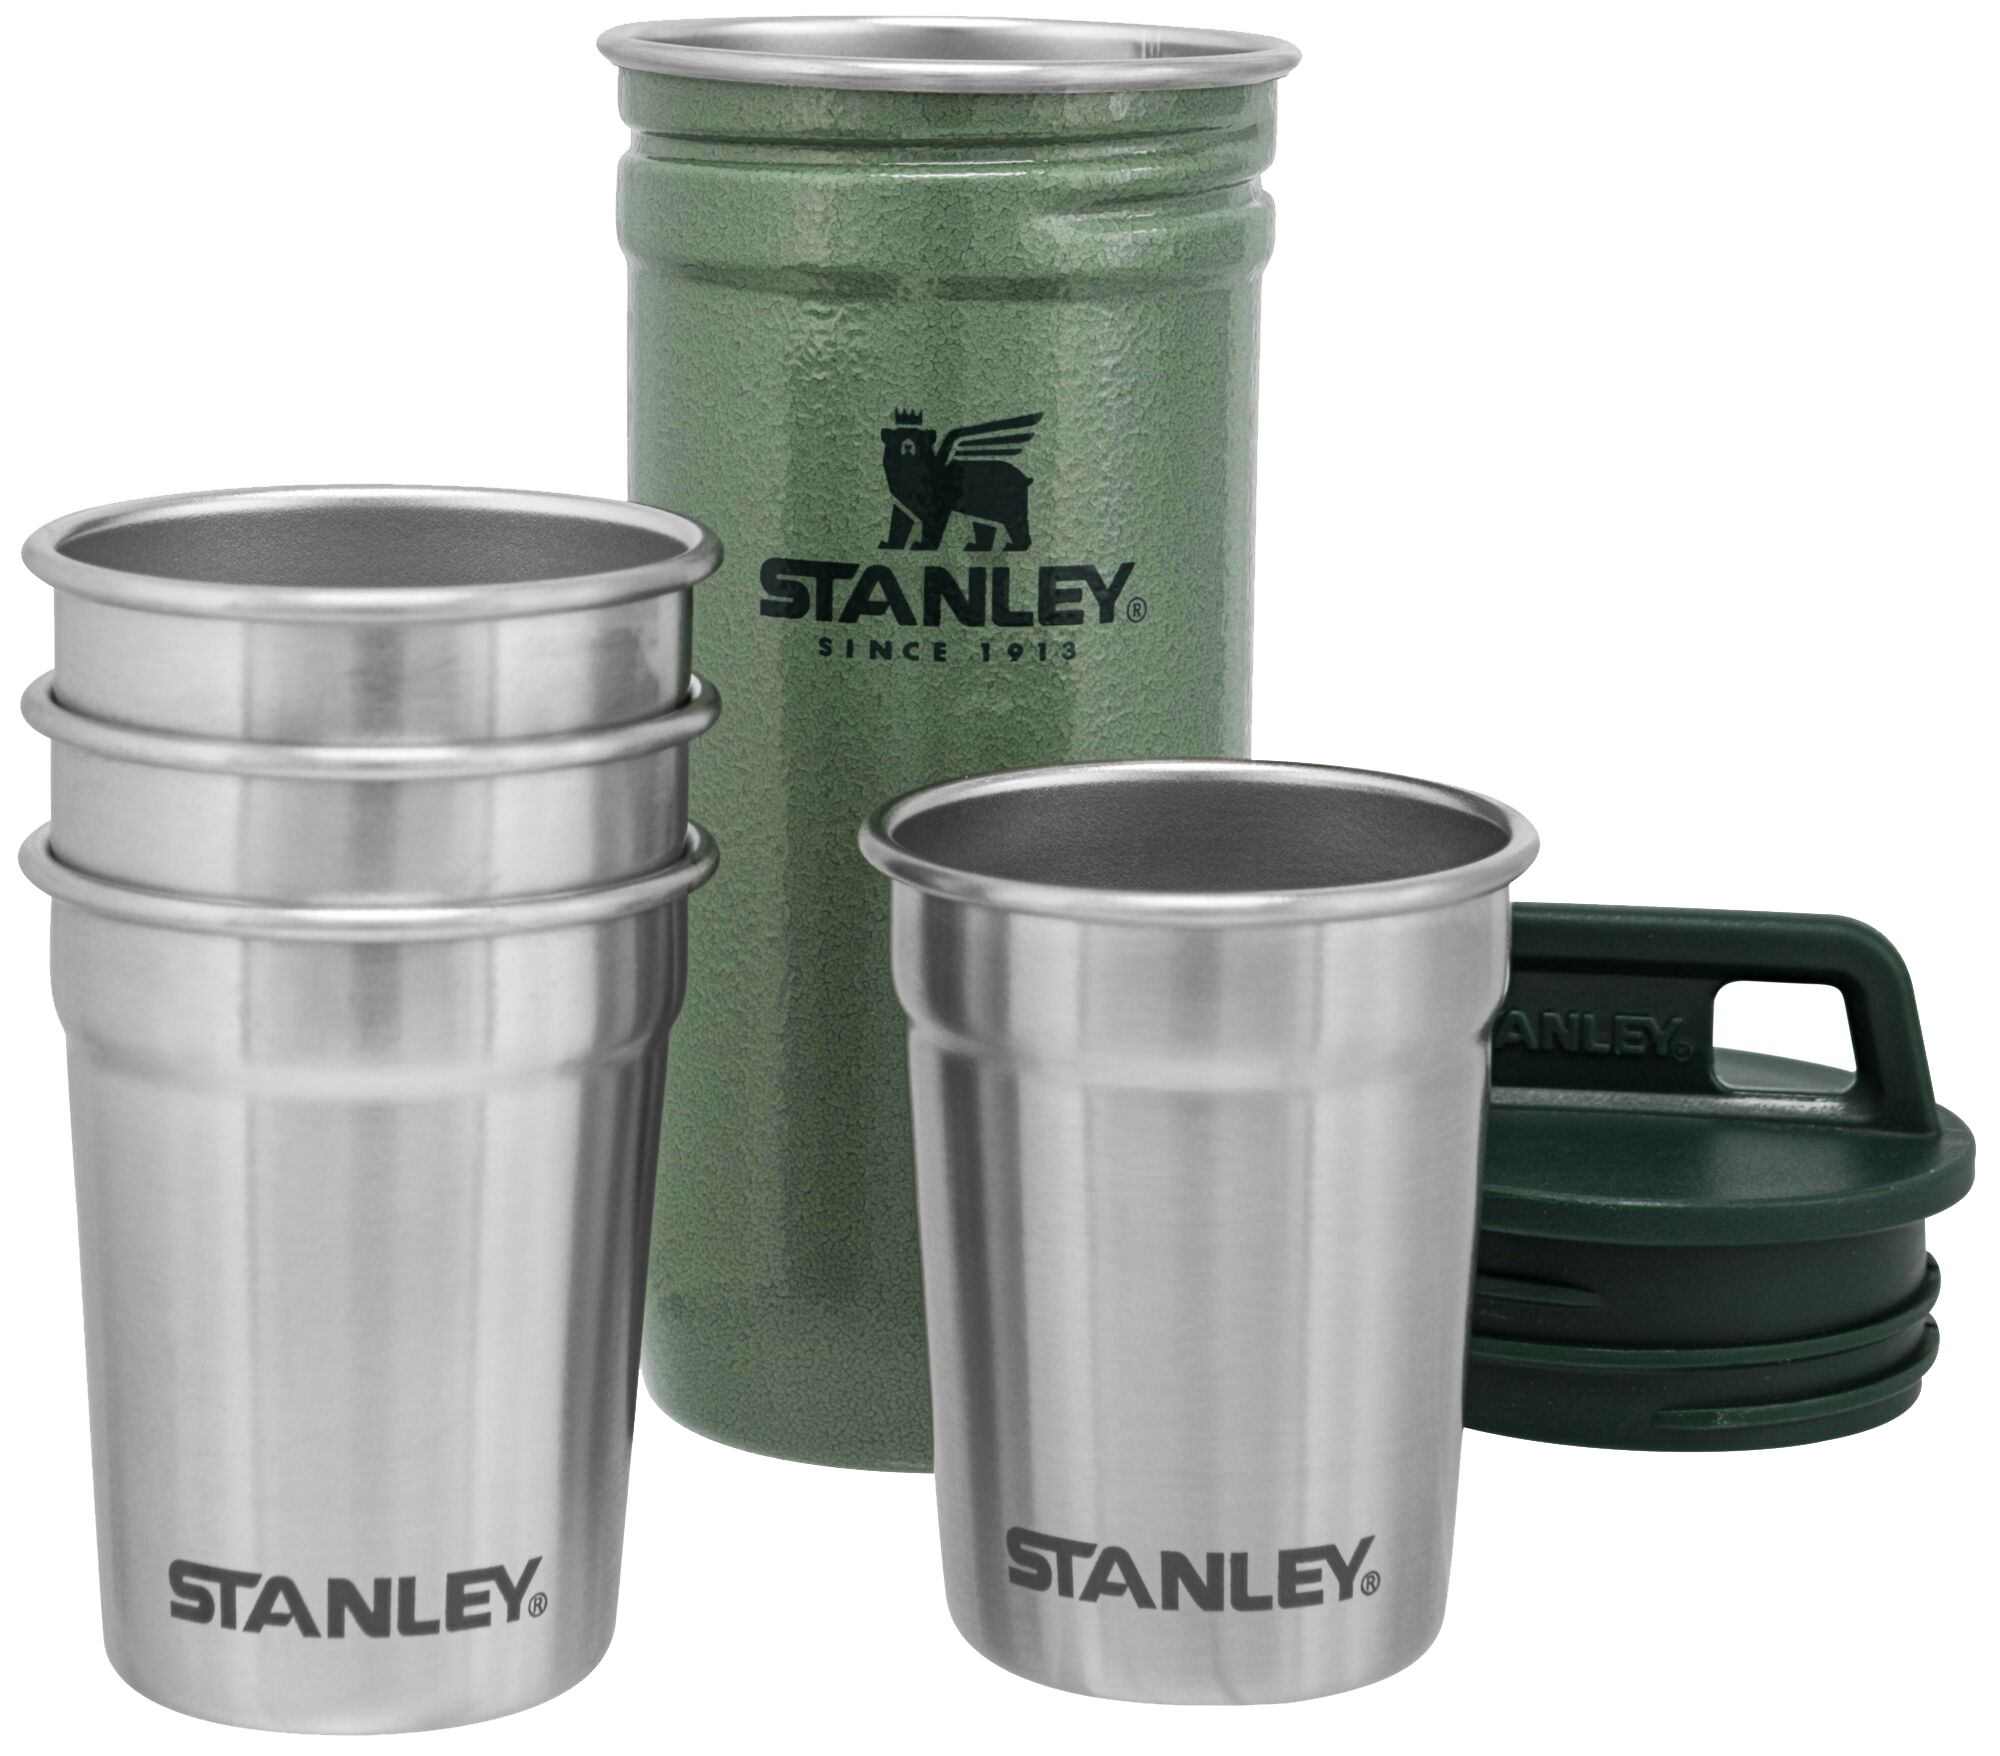 Stanley Shot Glasses 4-Pack Set